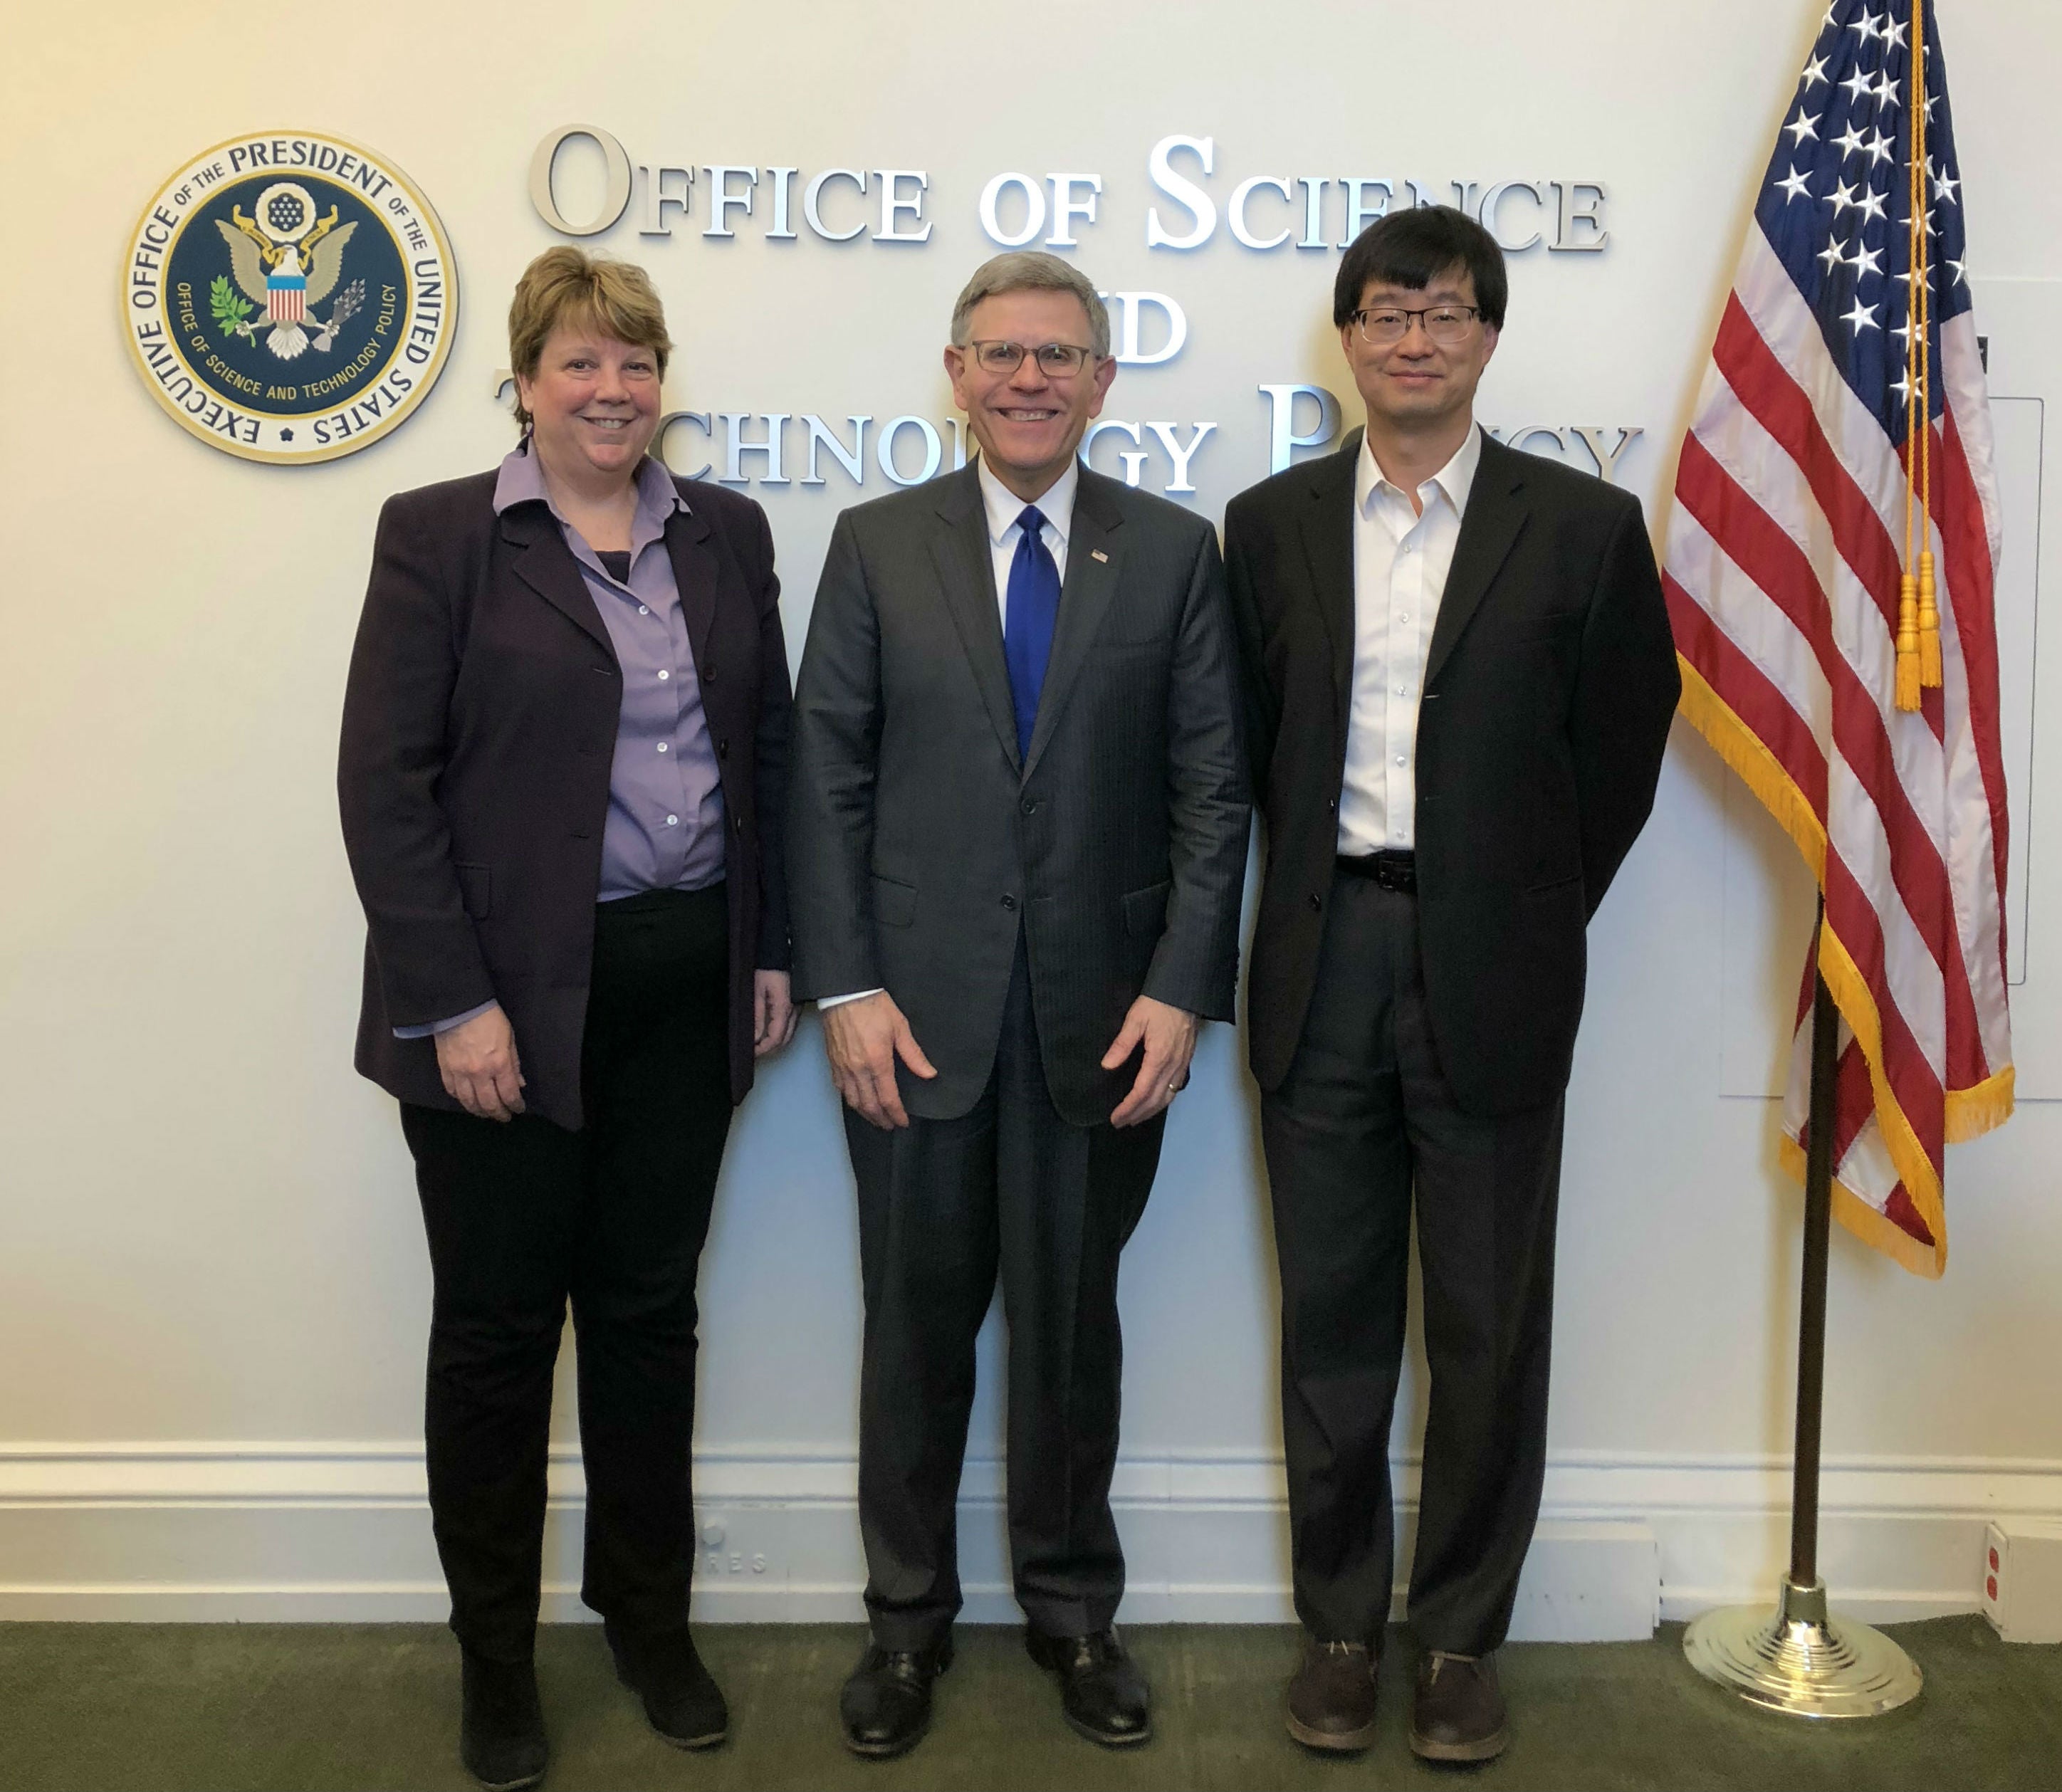 CU Boulder VC for Research & Innovation Terri Fiez; White House OSTP Director Kelvin Droegemeier; and CUbit Quantum Initiative Director Jun Ye